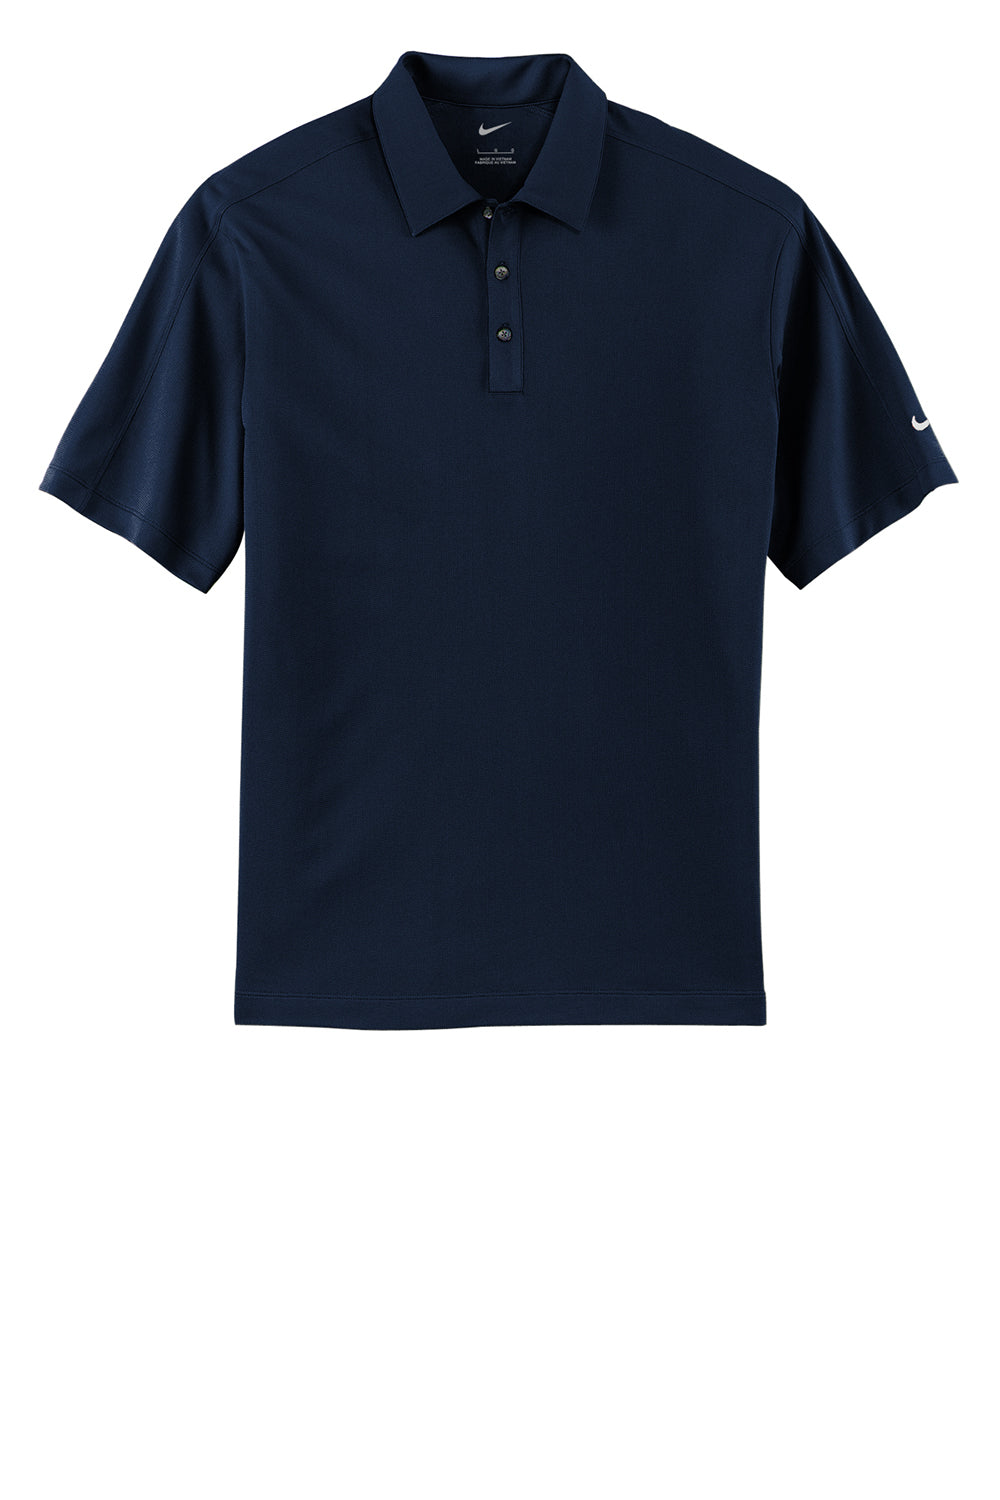 Nike 266998 Mens Tech Sport Dri-Fit Moisture Wicking Short Sleeve Polo Shirt Navy Blue Flat Front